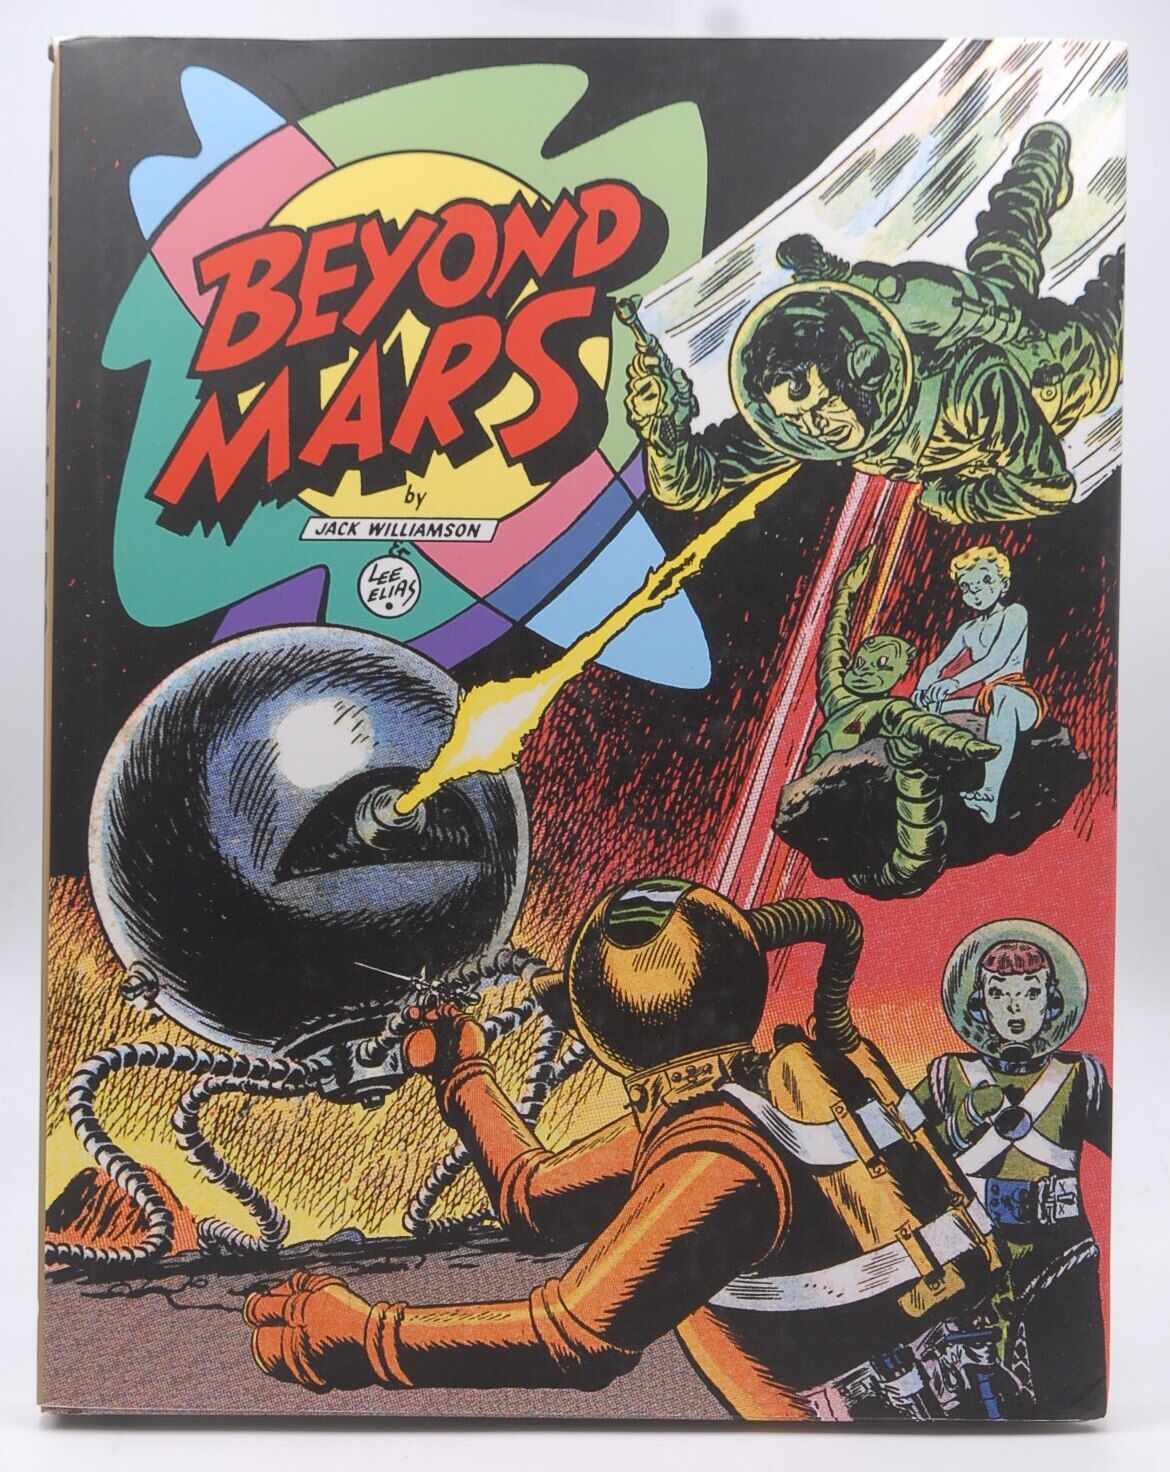 Beyond Mars - Williamson, Jack IDW Publishing hardcover Book